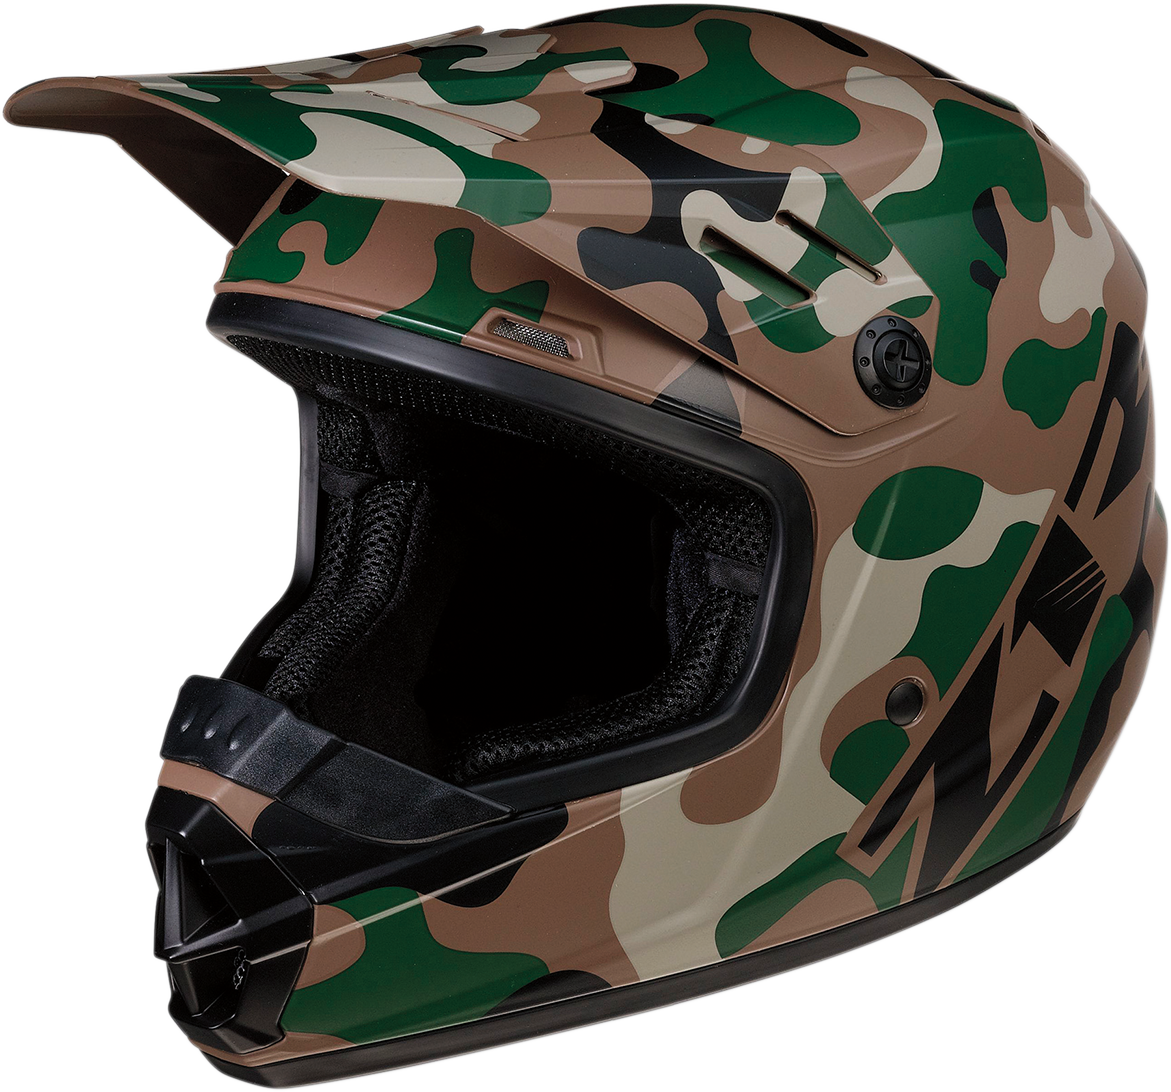 Z1R Youth Rise Helmet - Camo - Woodland - Large 0111-1260